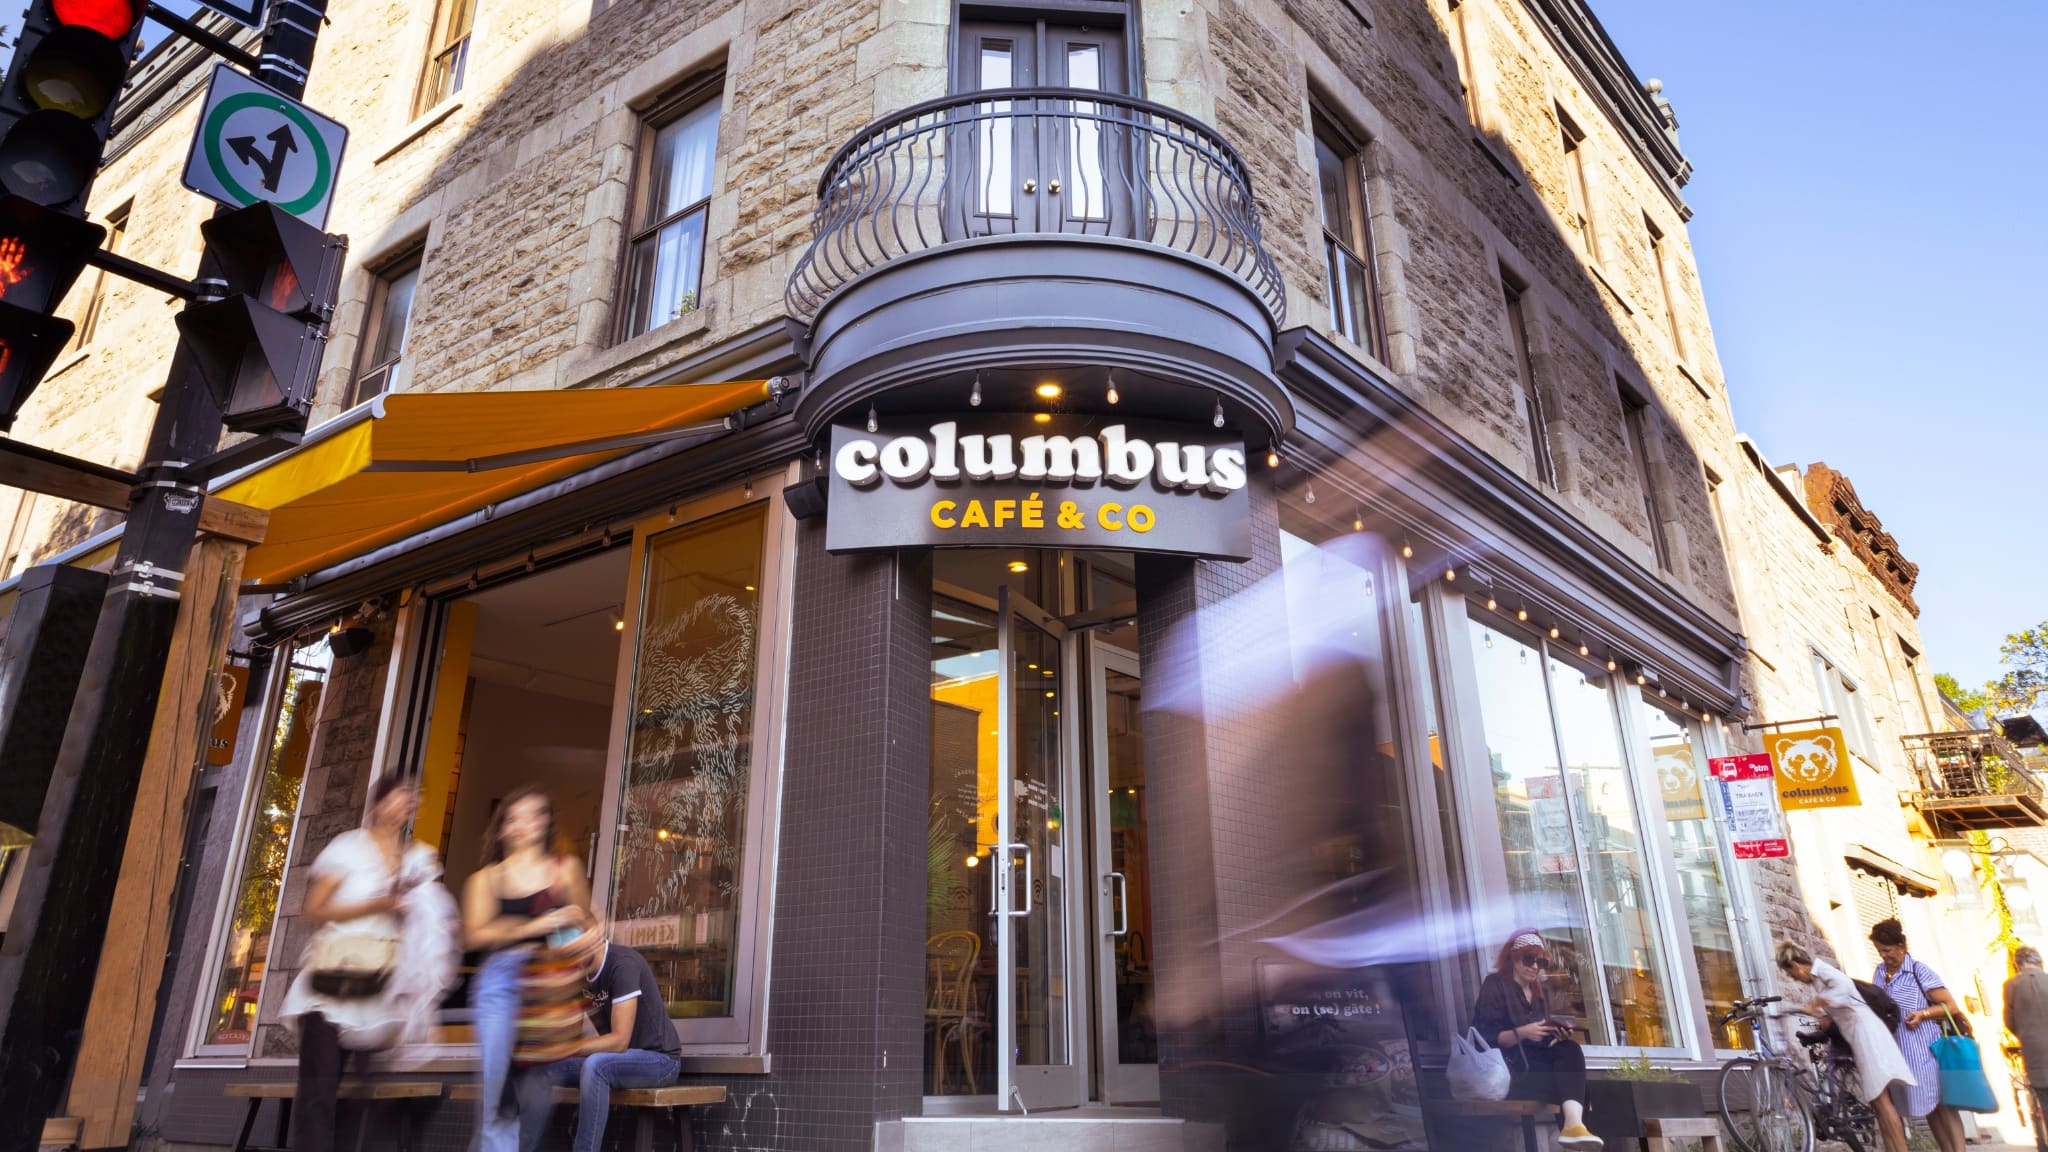 Featured image for “Columbus Café & Co”